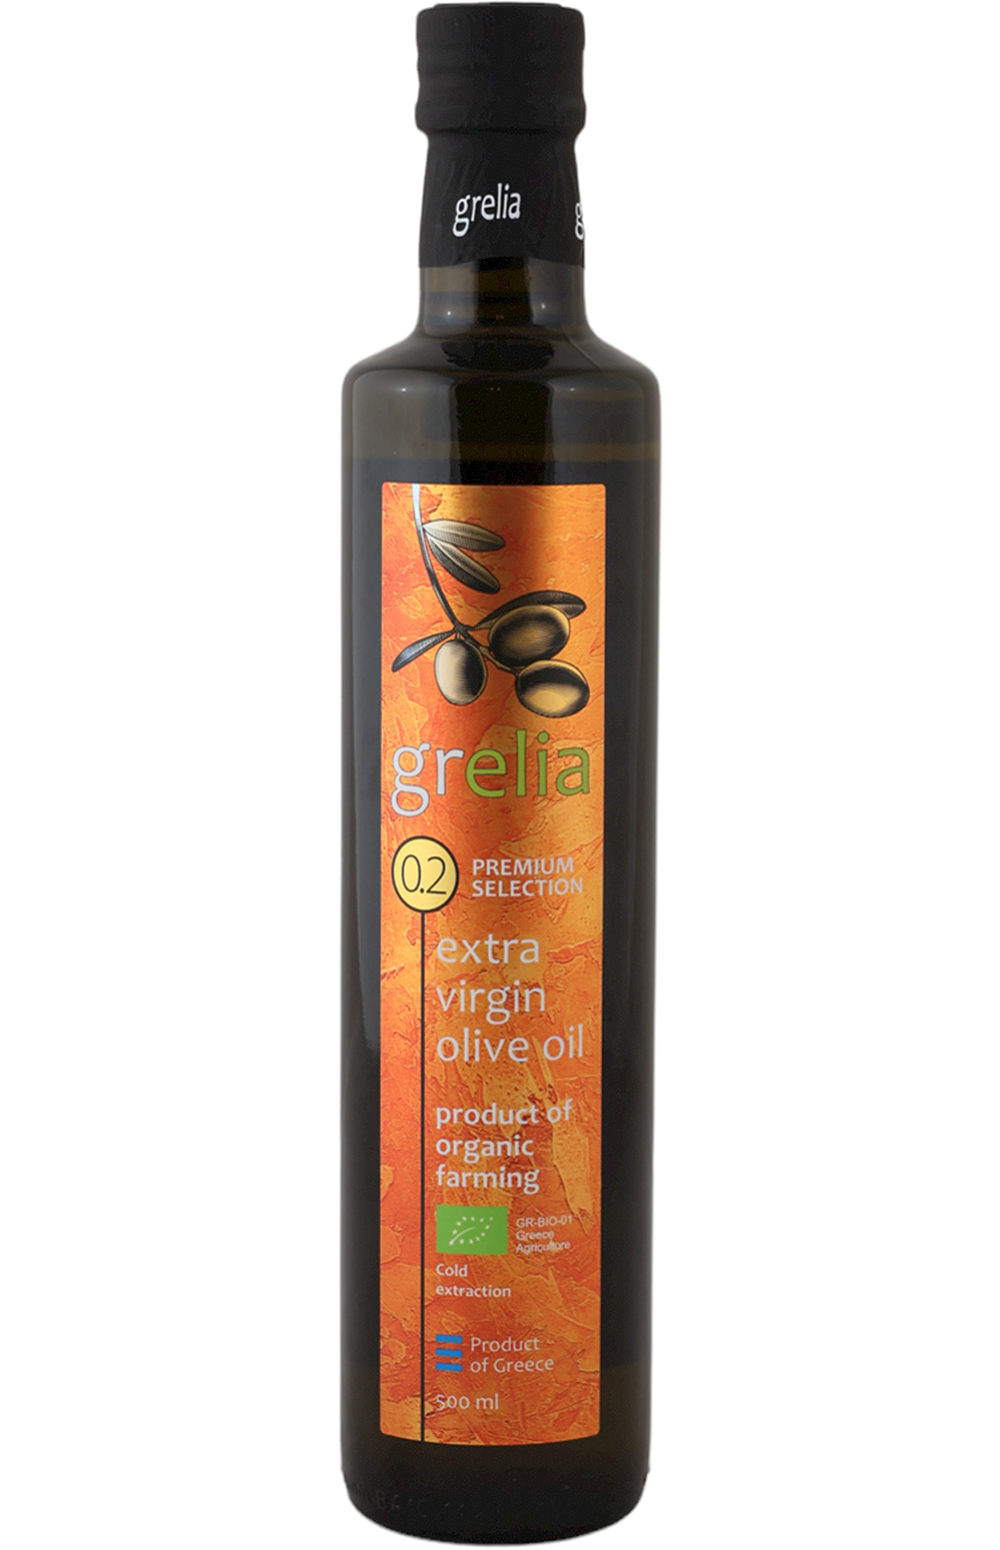 Grelia Biological Extra Virgin Olive Oil- στην αιτηση λεει Dorica